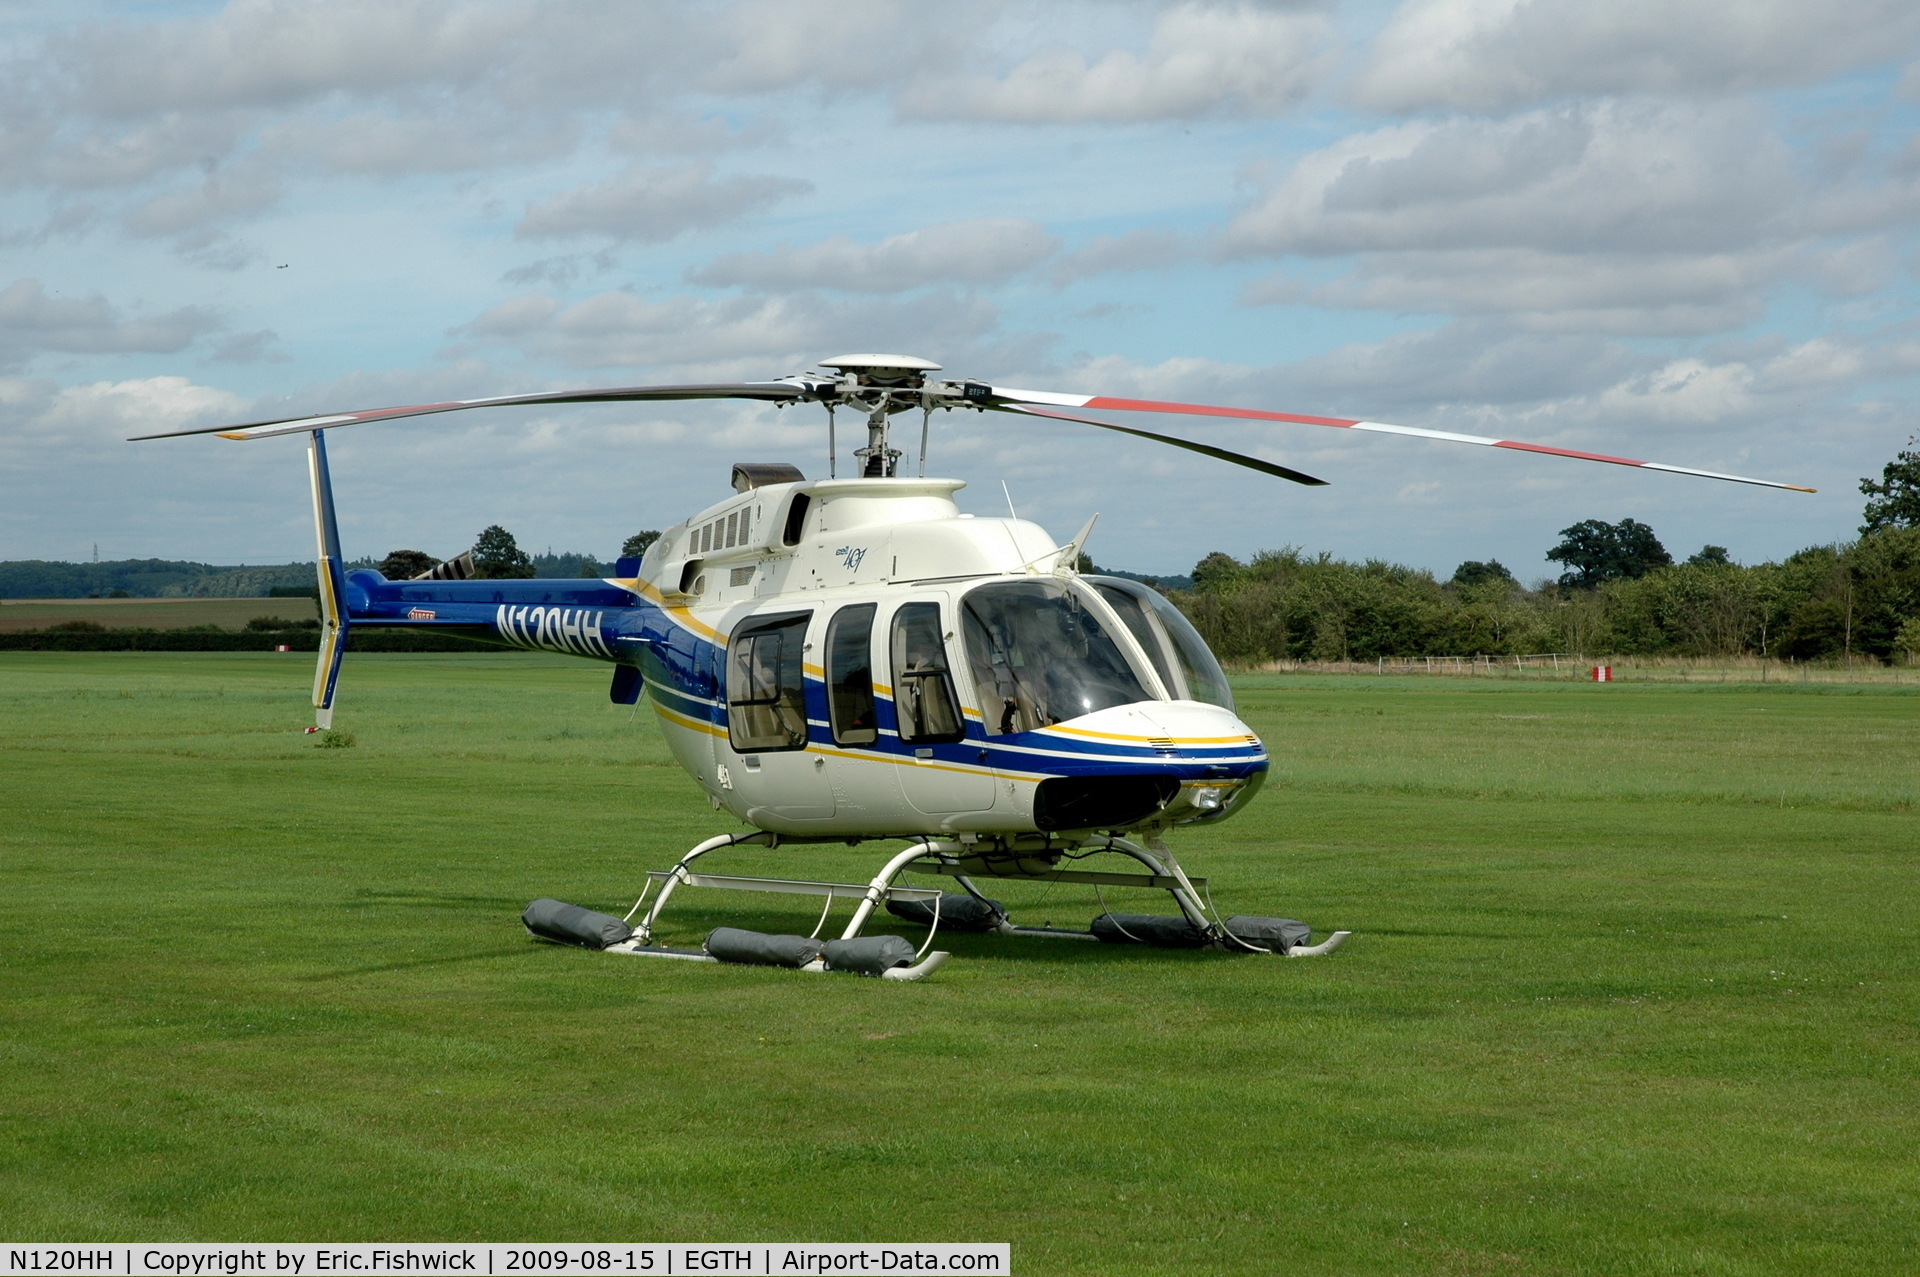 N120HH, 2005 Bell 407 C/N 53661, 3. N120HH at Shuttleworth Evening Air Display Aug 09